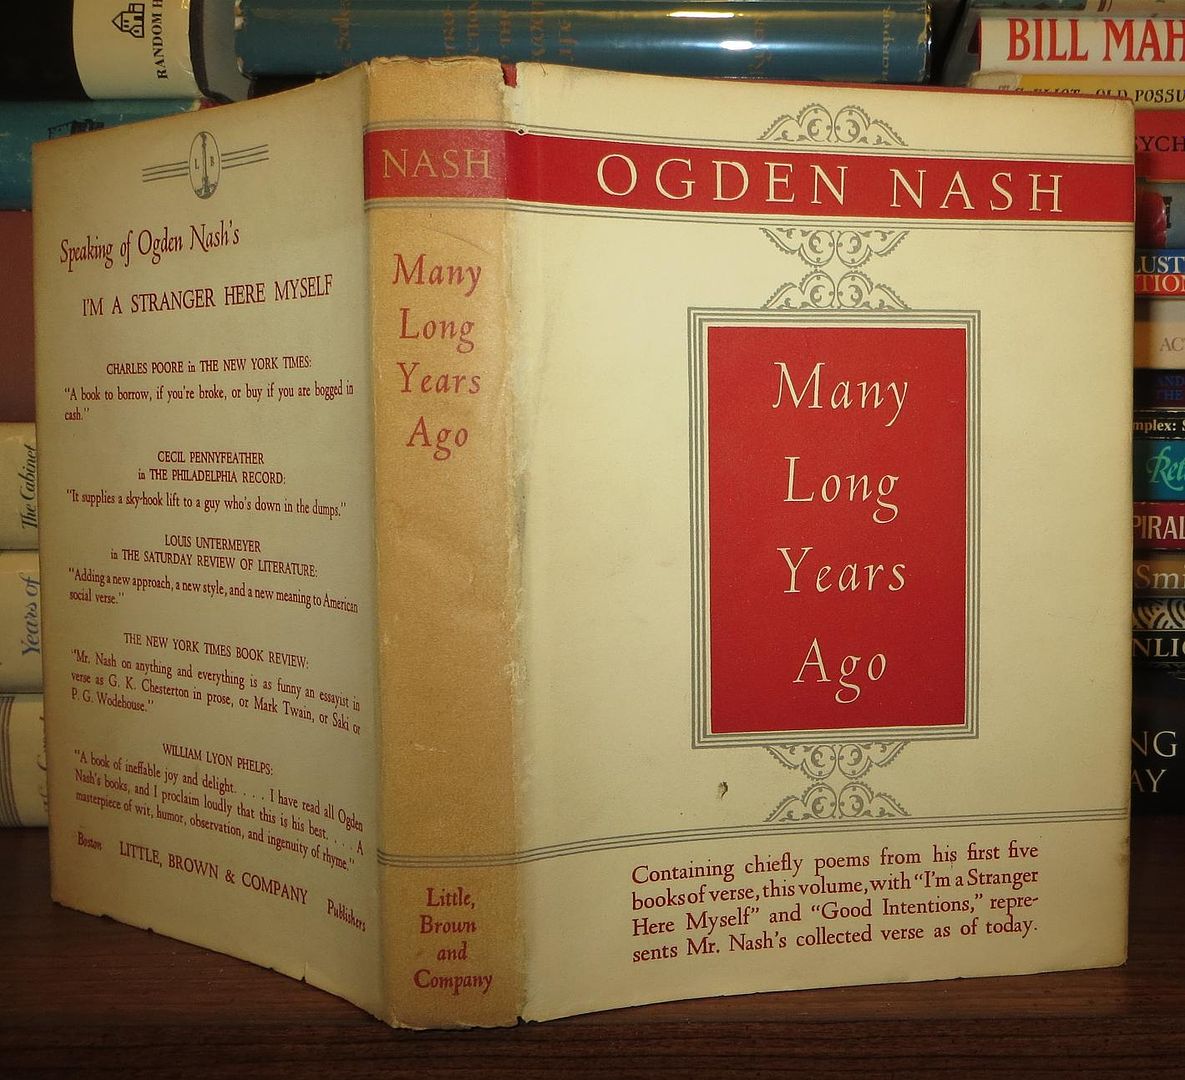 NASH, OGDEN - Many Long Years Ago